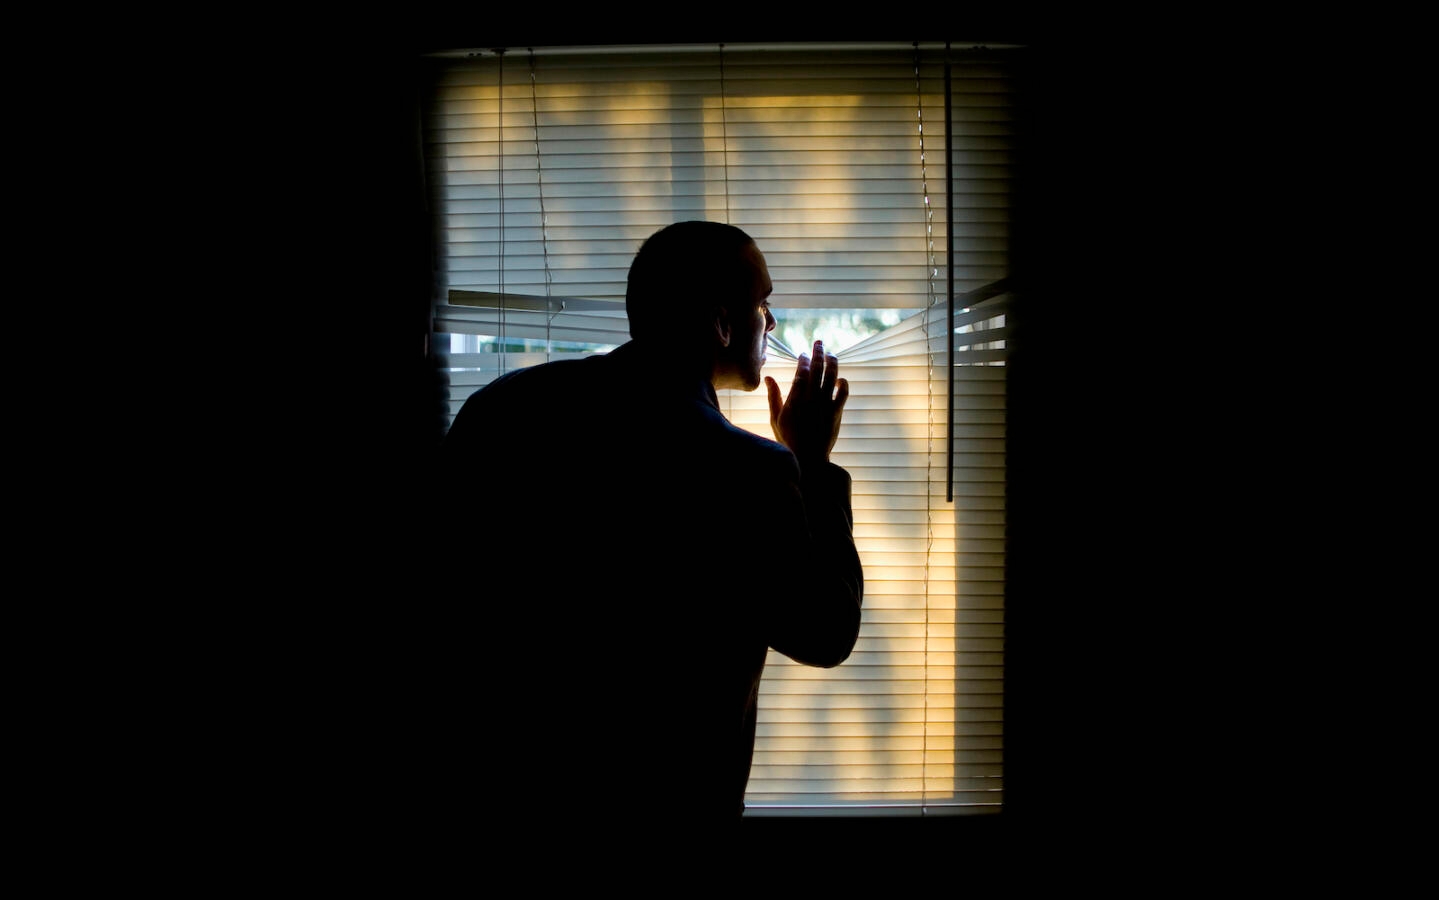 A man peeking outdoors through the blinds of a darkened room